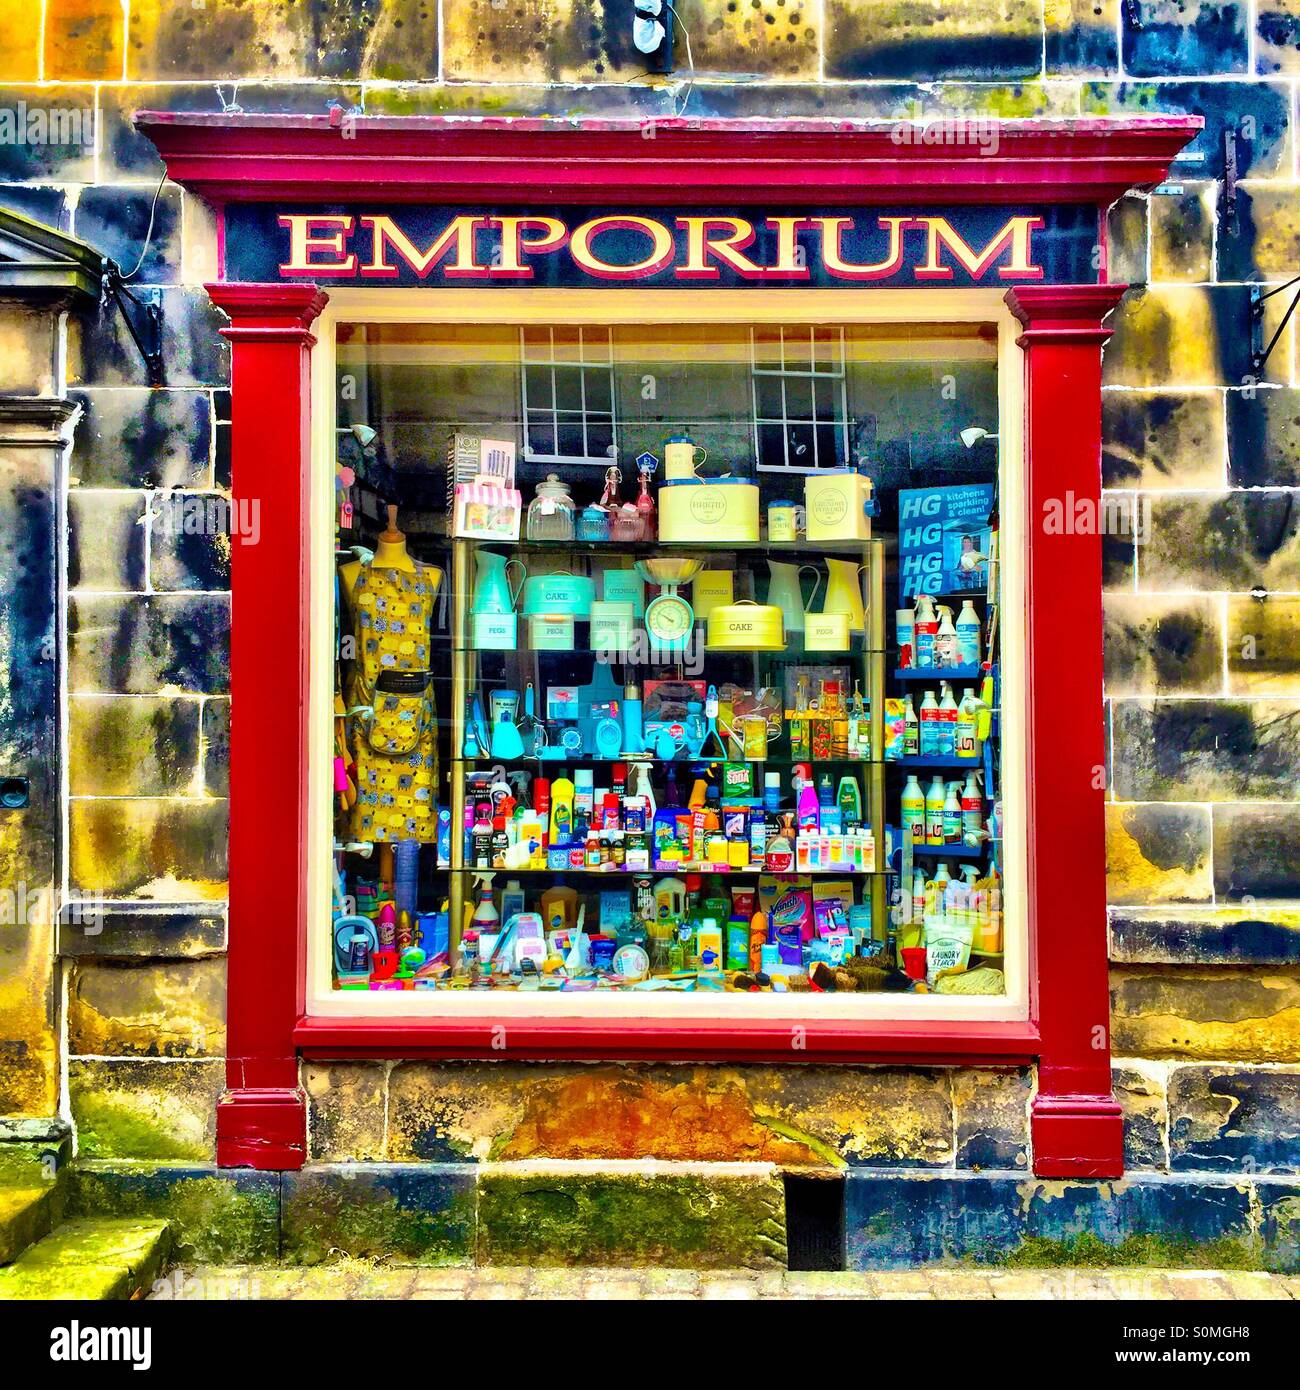 A shop called Emporium Stock Photo